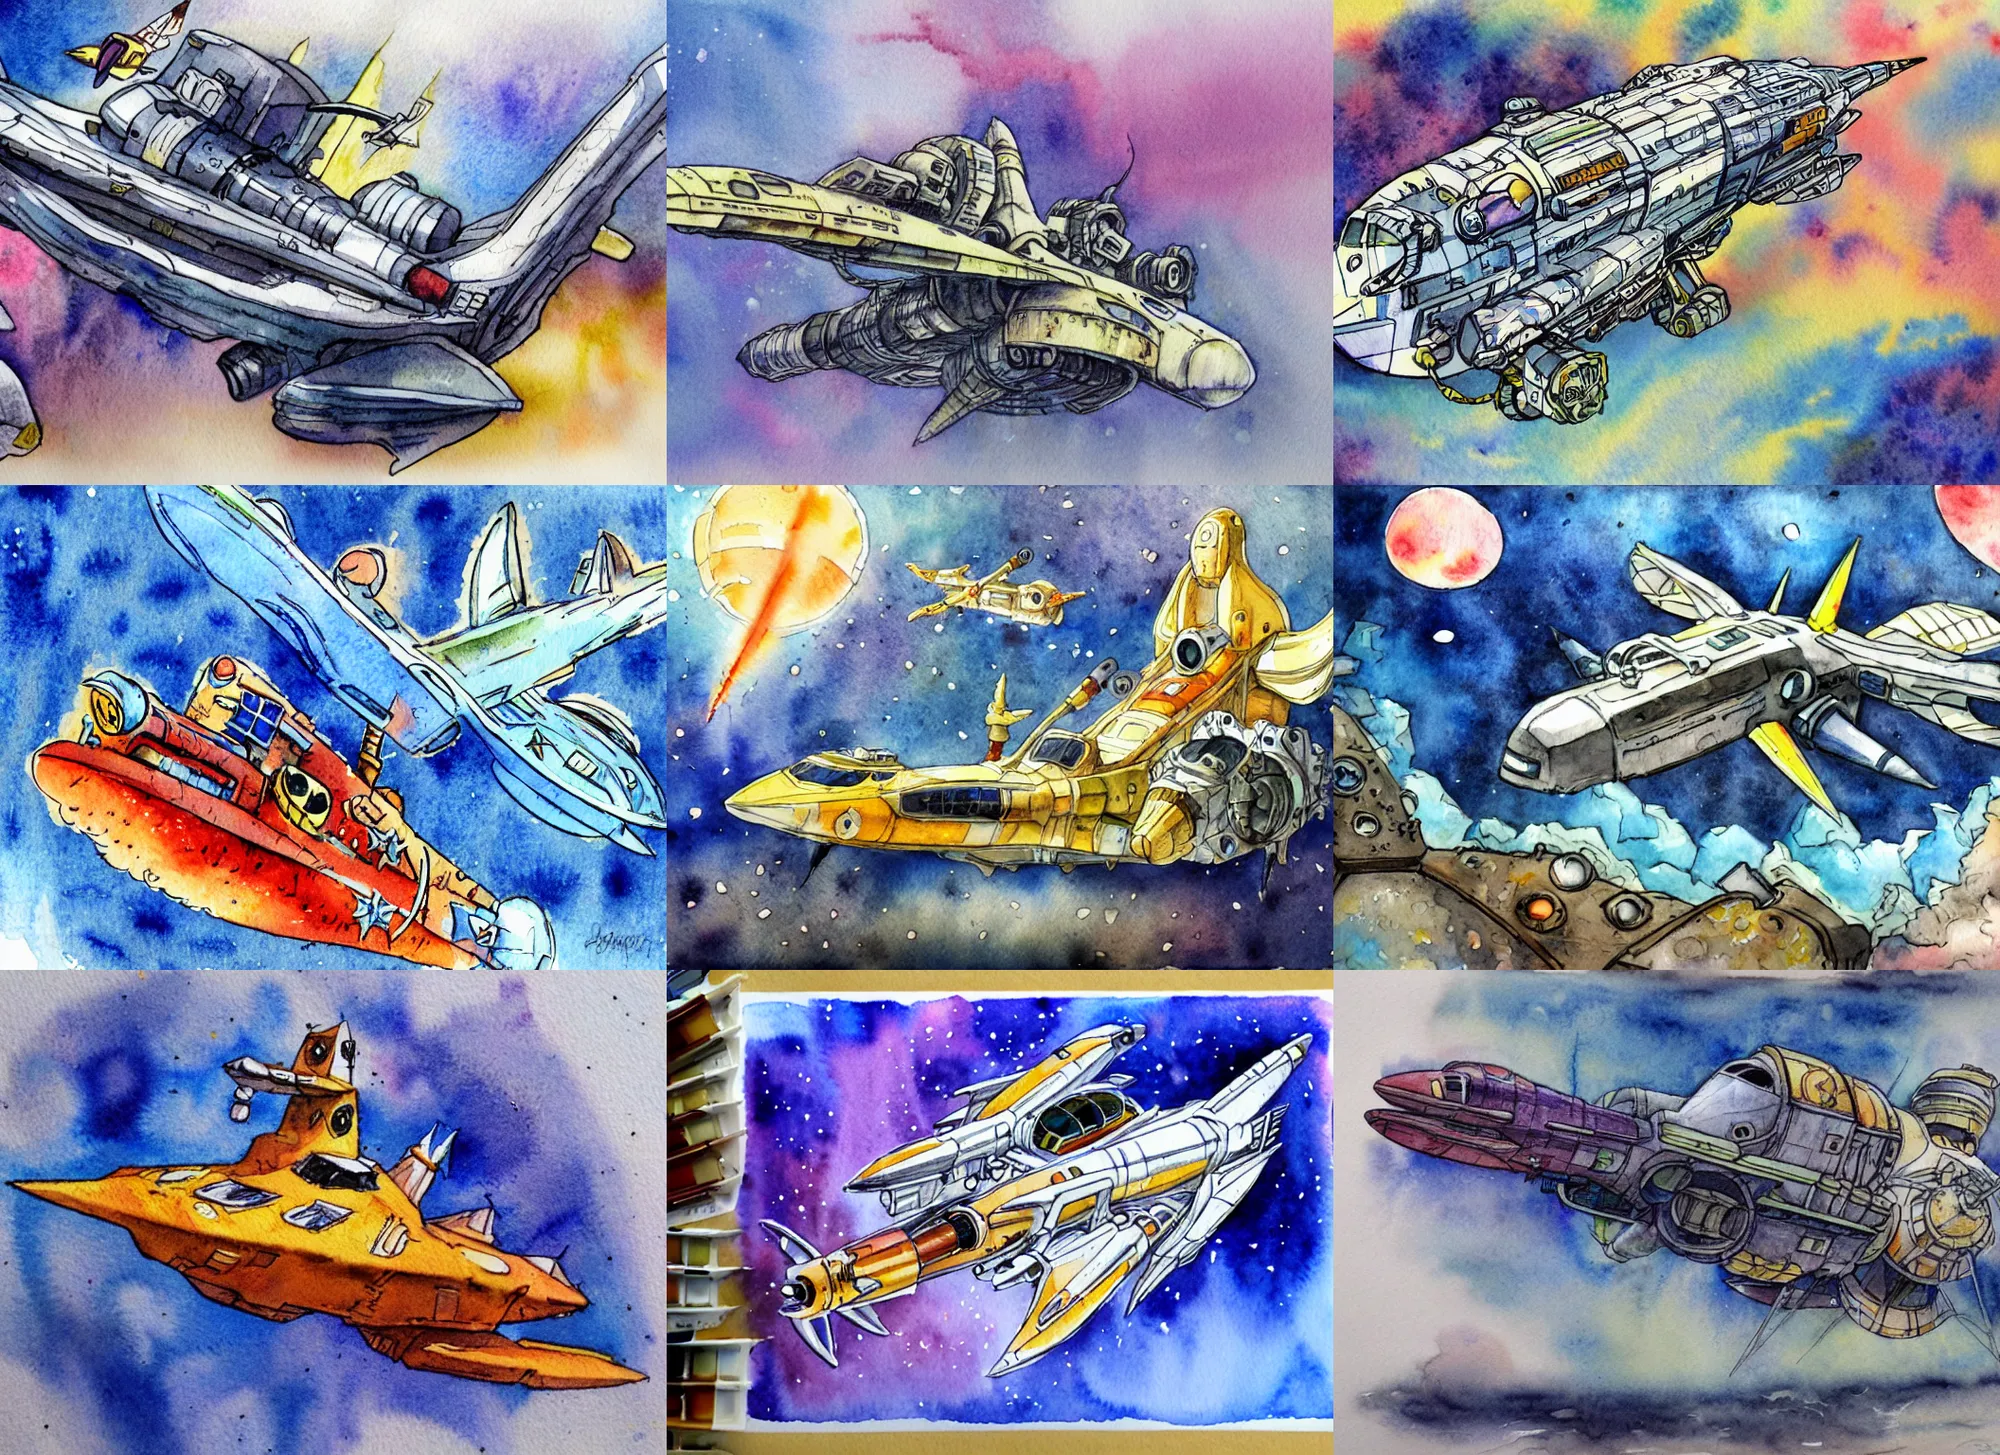 Prompt: detailed watercolor painting cartoon fantasy spaceship